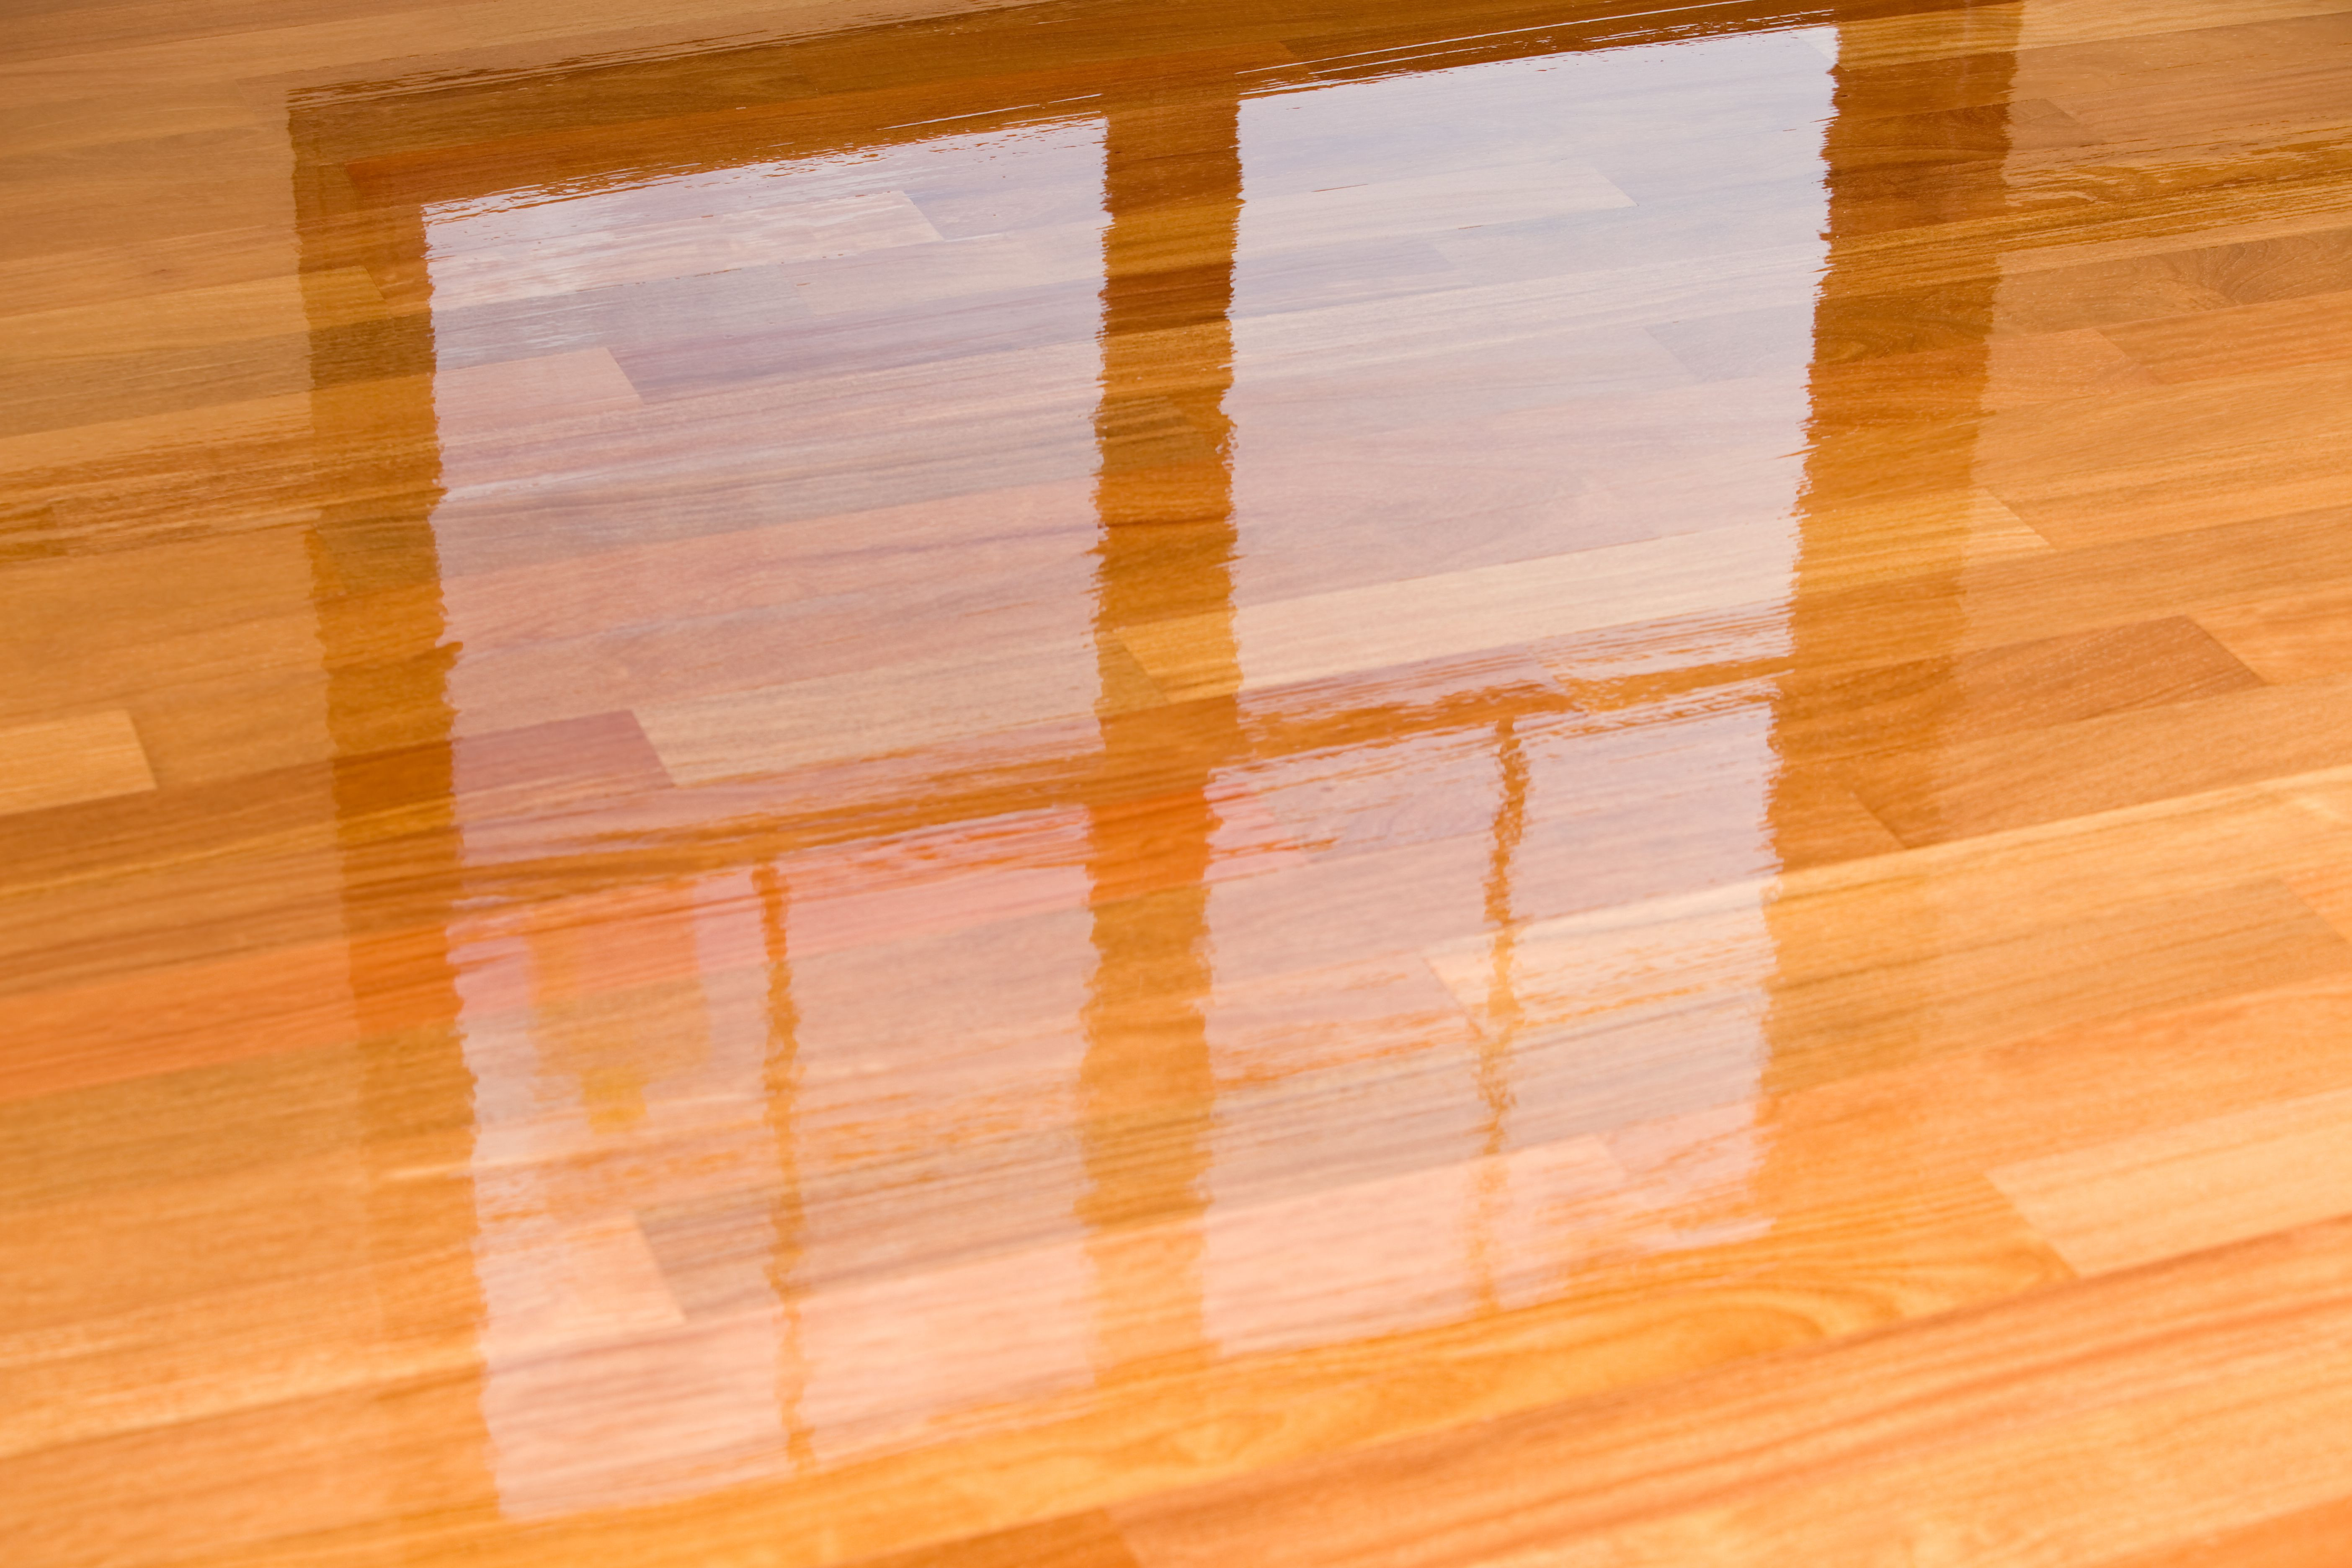 28 Stylish Hardwood Flooring Labor Rates 2022 free download hardwood flooring labor rates of guide to laminate flooring water and damage repair in wet polyurethane on new hardwood floor with window reflection 183846705 582e34da3df78c6f6a403968